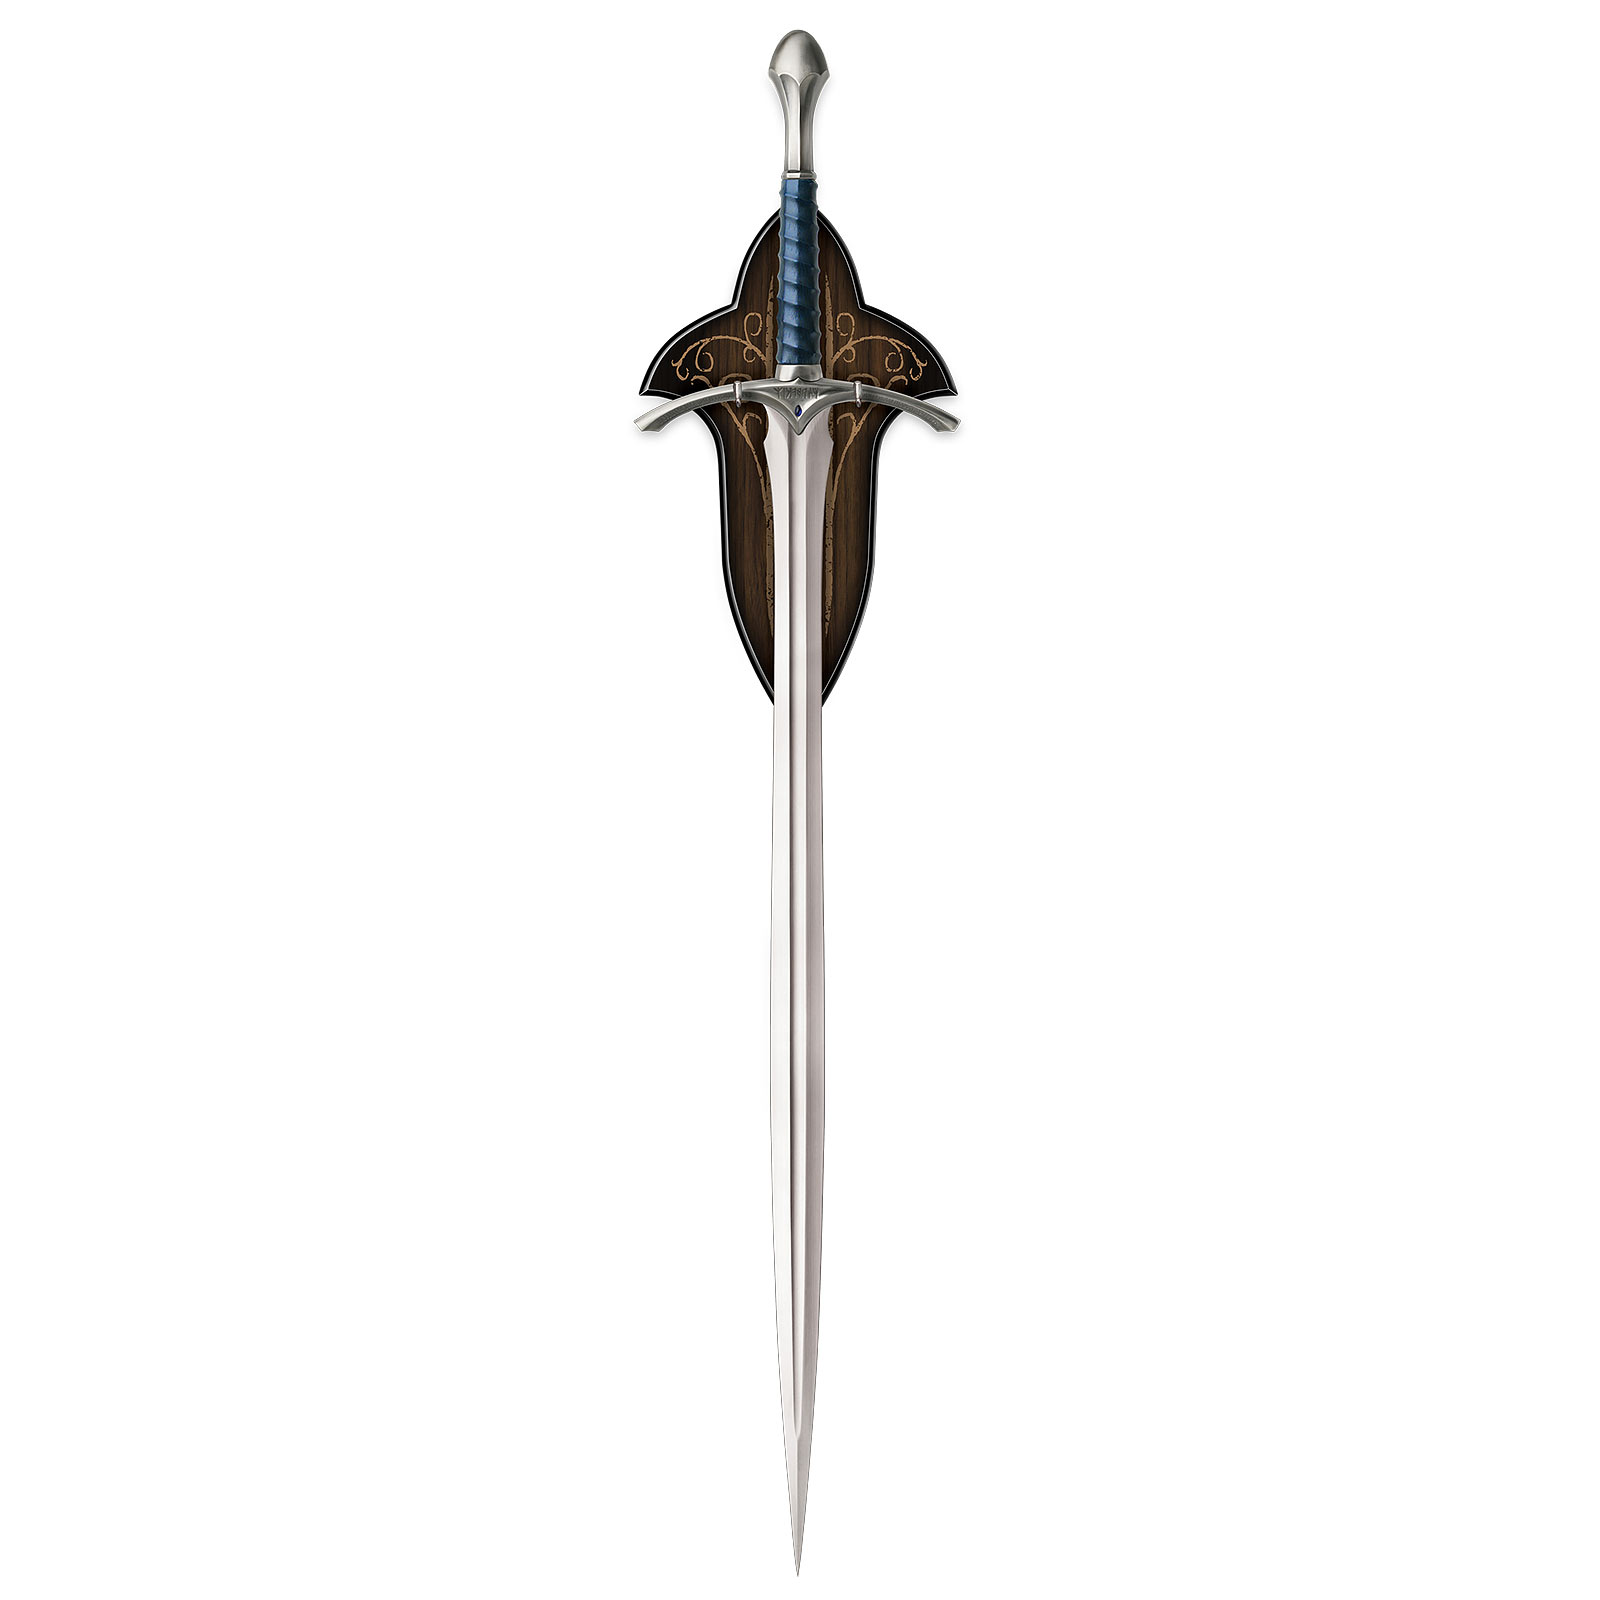 Gandalf's Sword - Glamdring